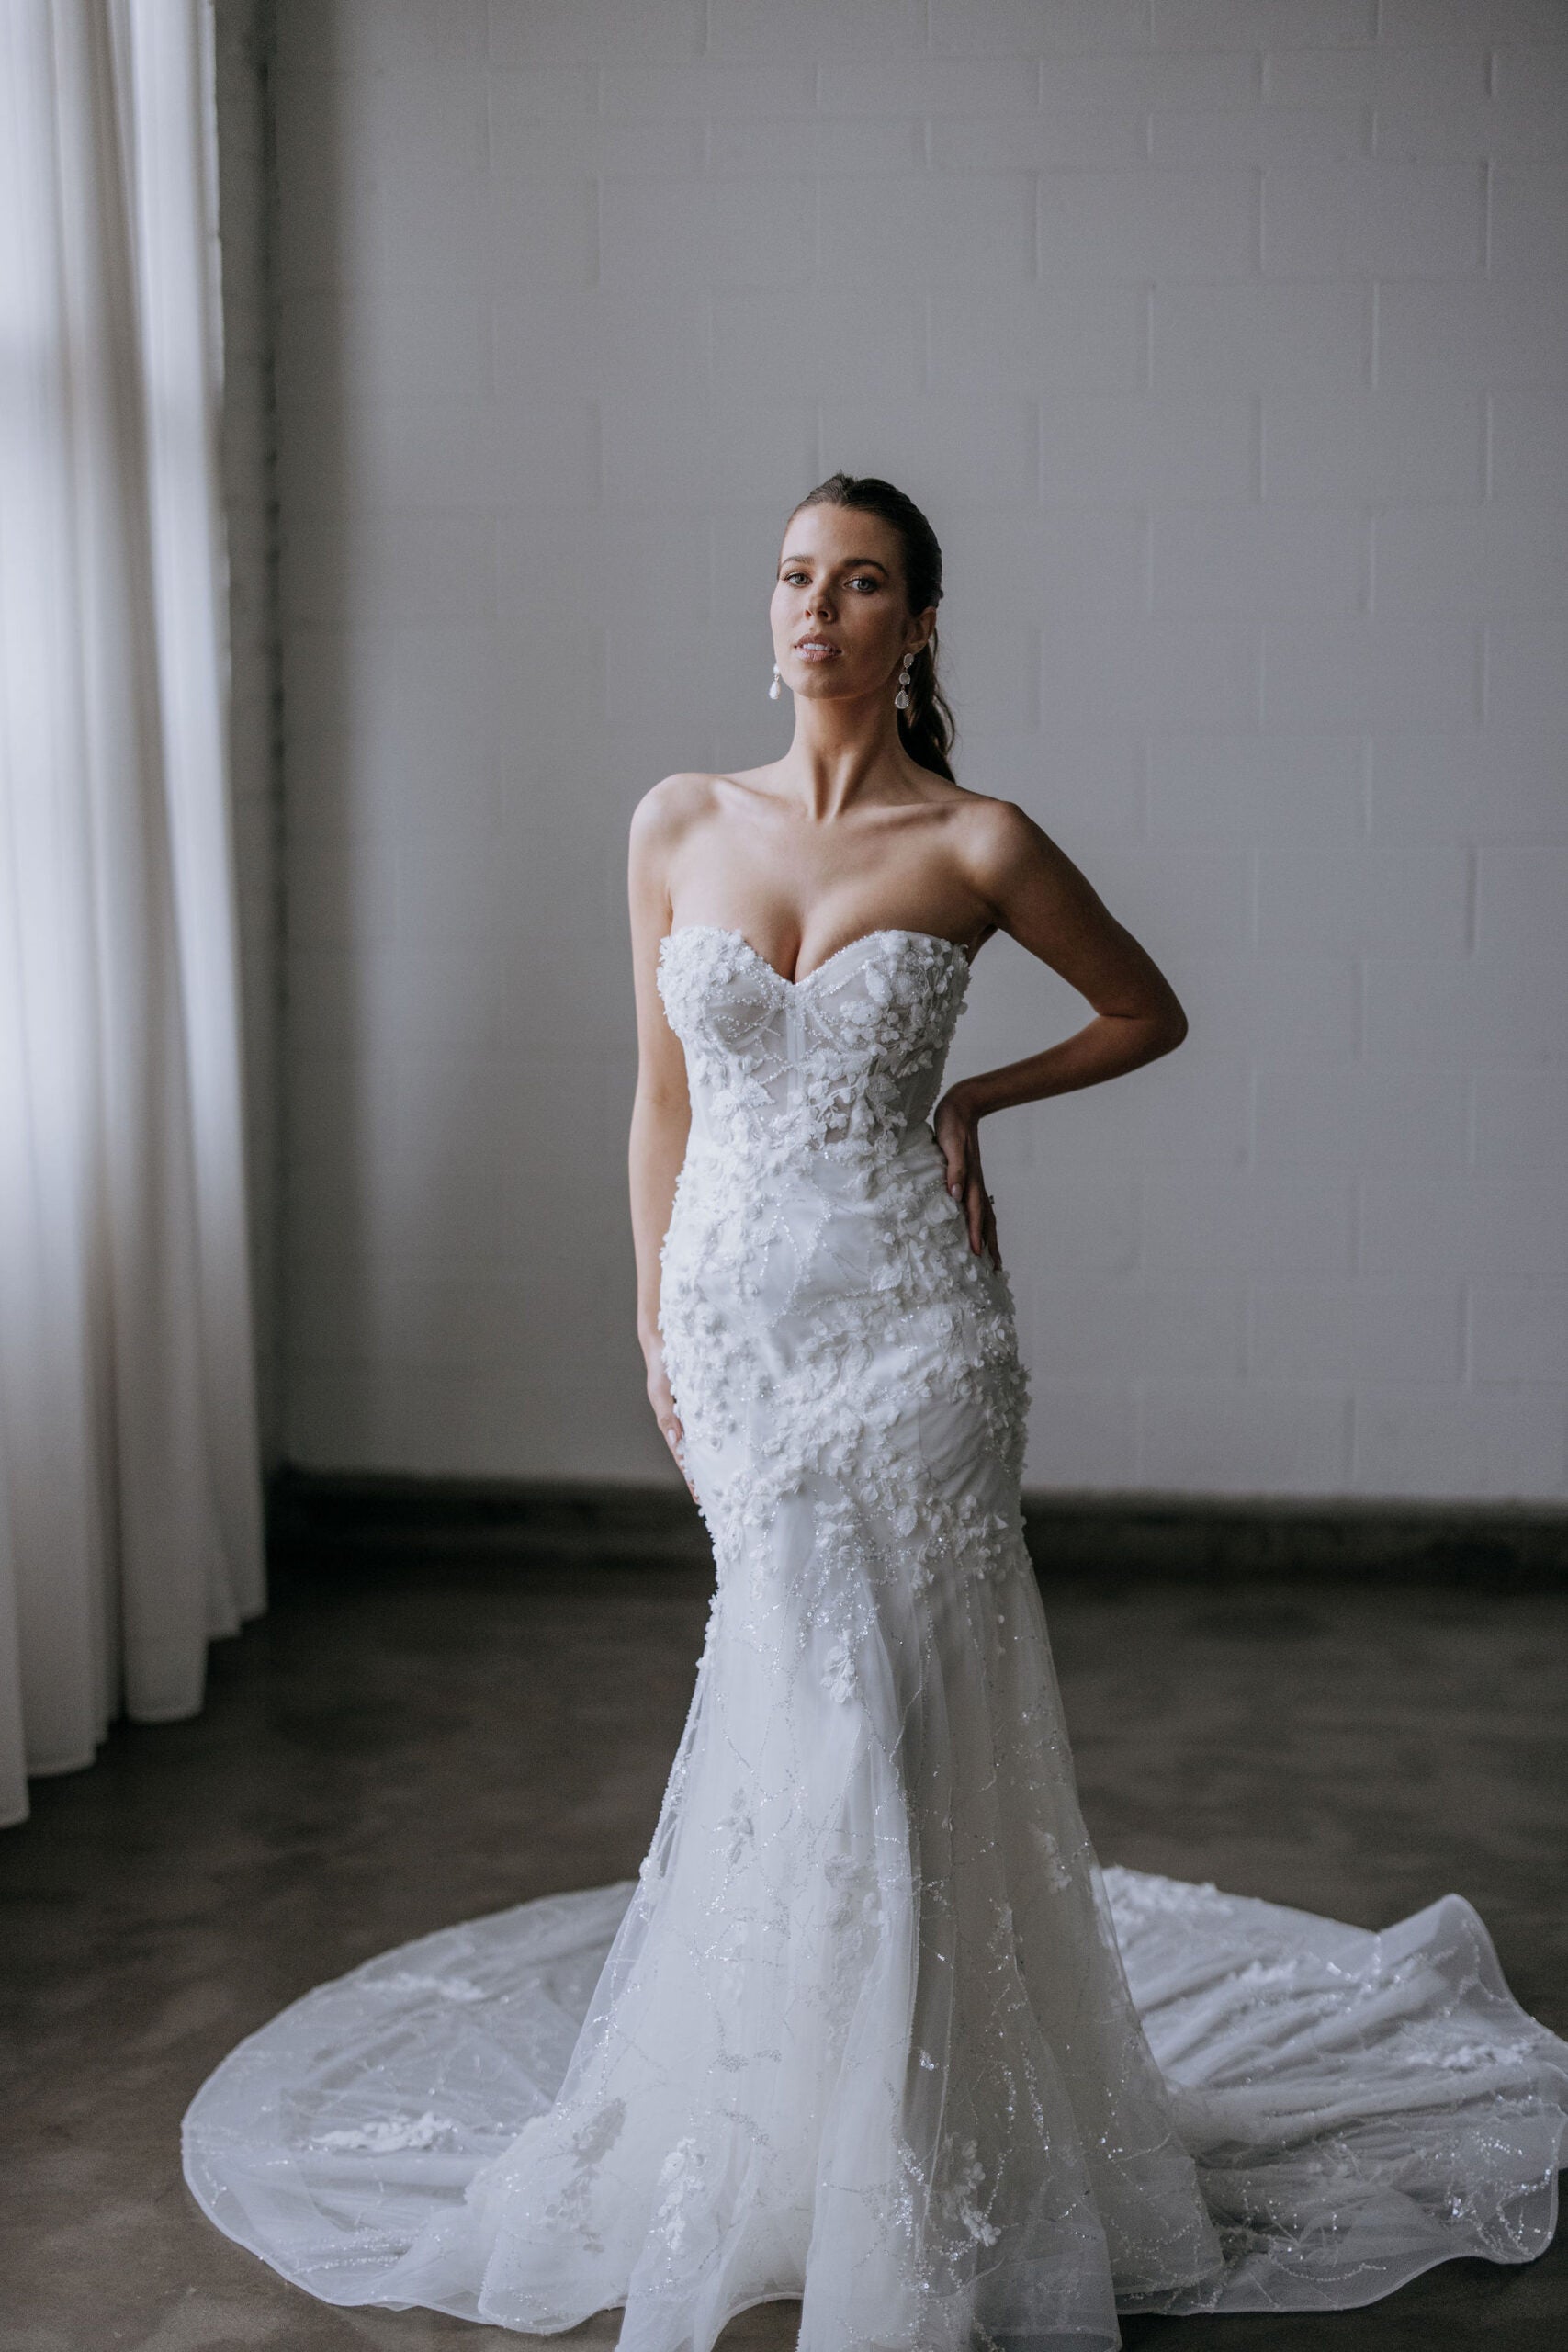 Affordable wedding dress Melbourne - Leah S Designs Bridal Gown